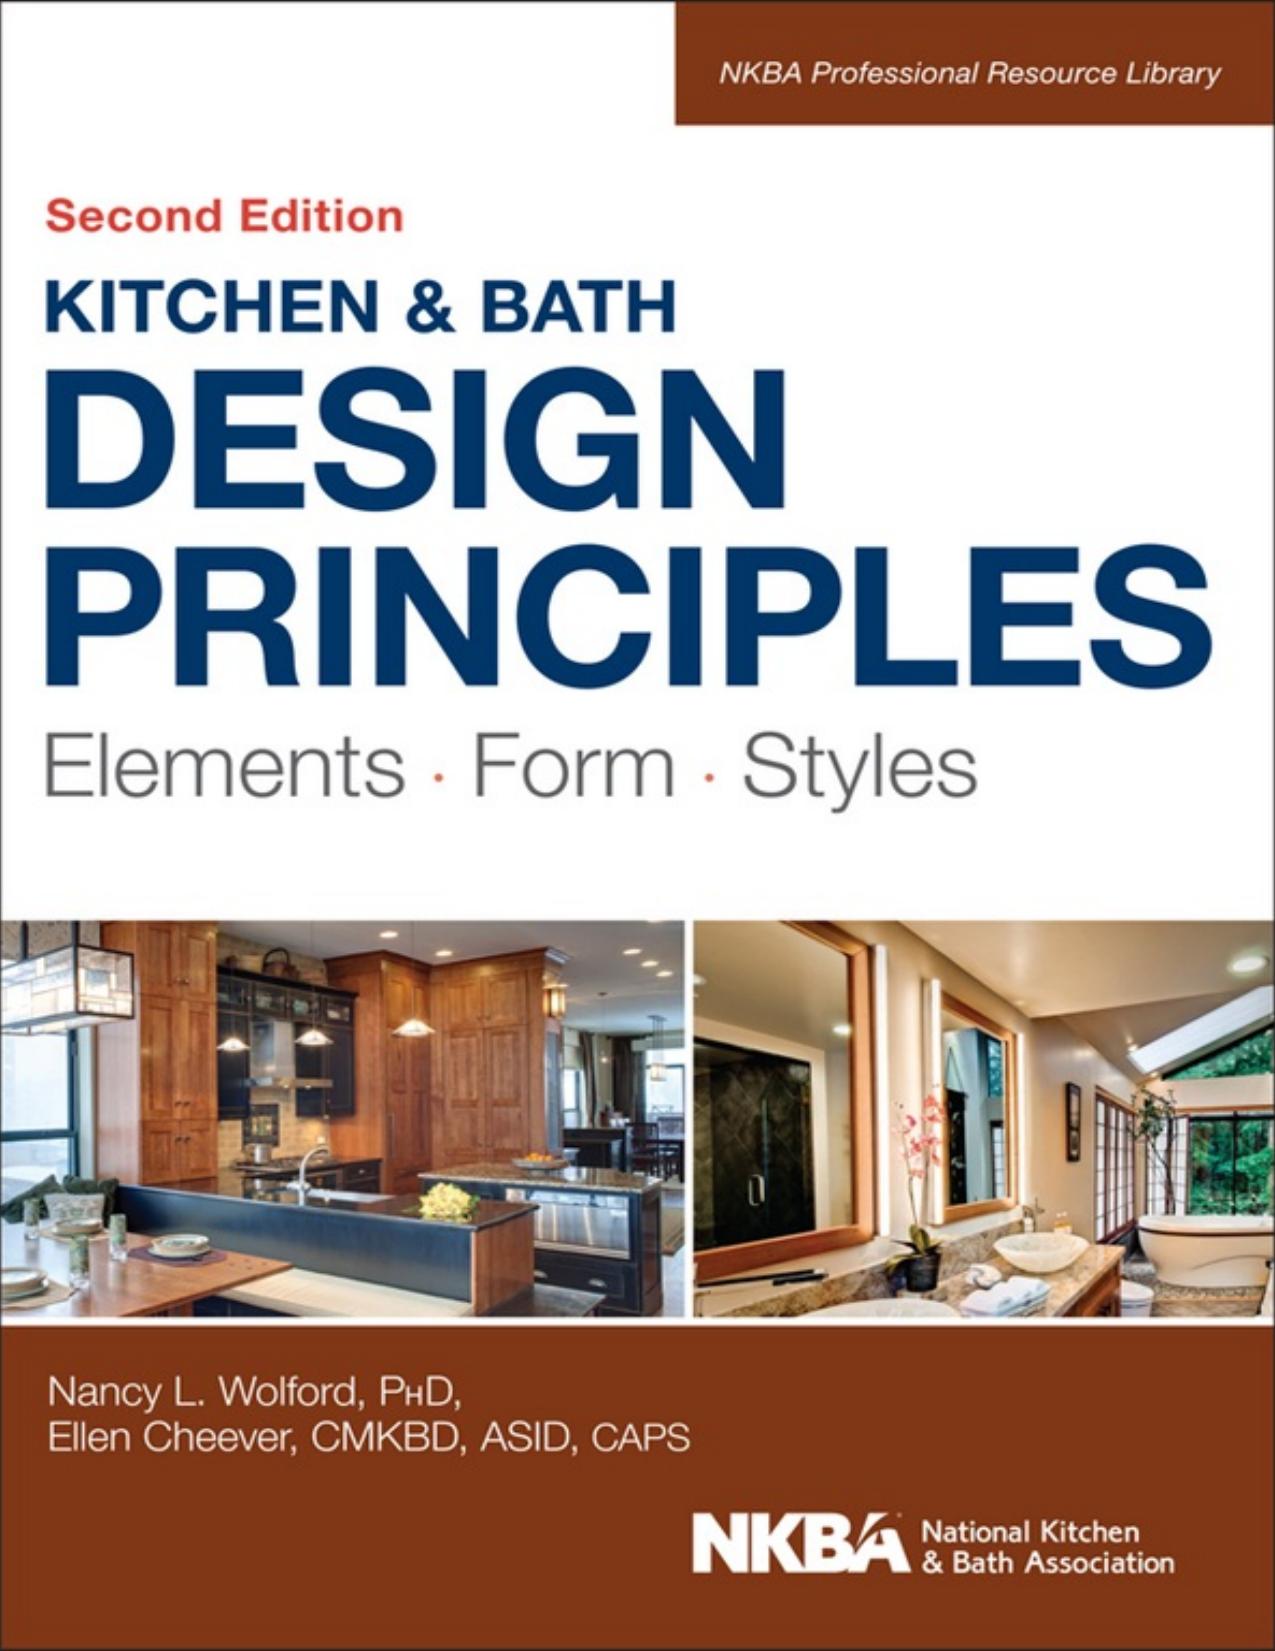 Kitchen and Bath Design Principles: Elements, Form, Styles - PDFDrive.com